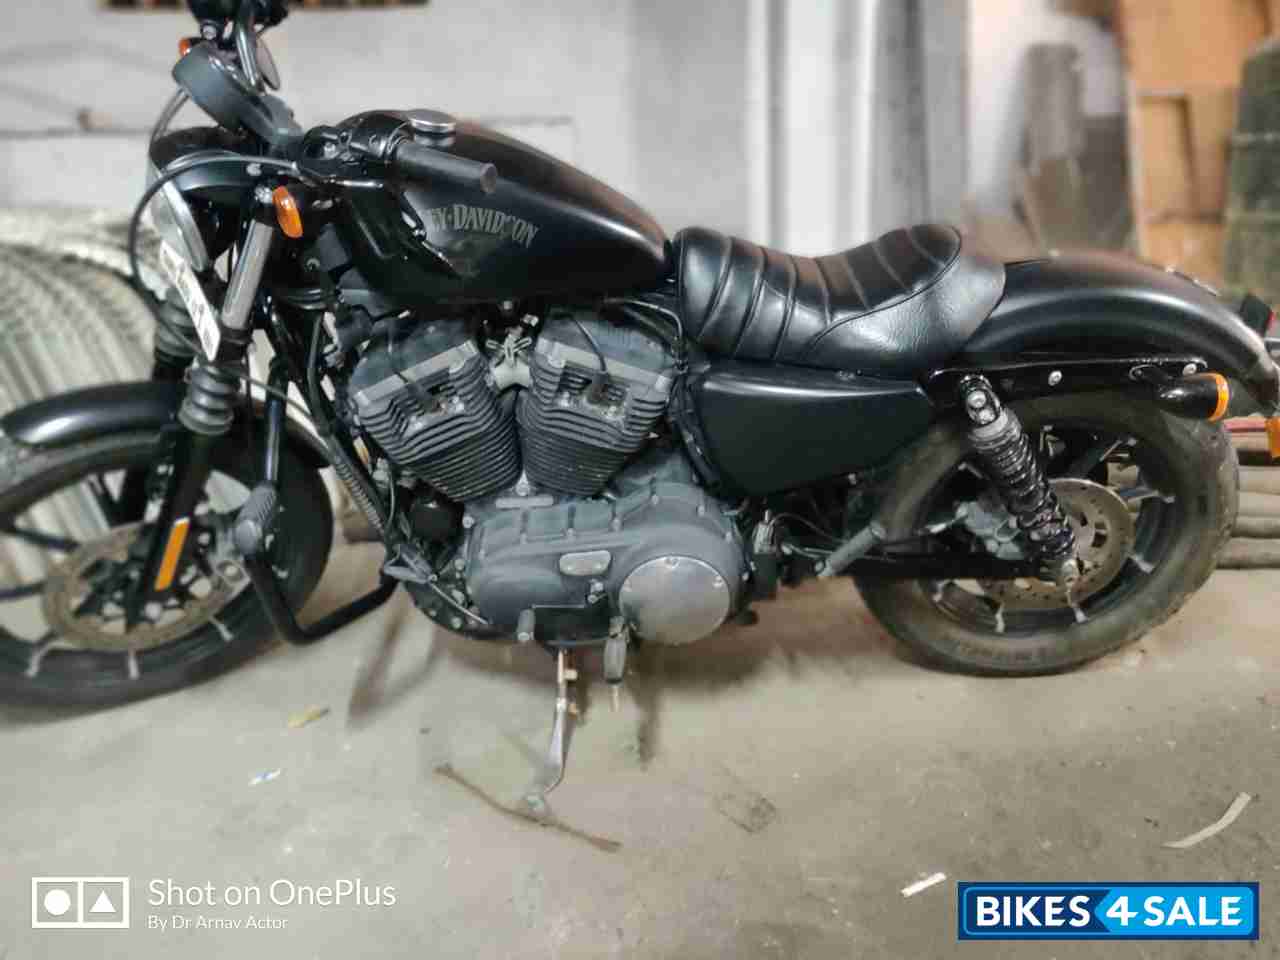 Harley Davidson Iron 883 Price In Chennai Promotion Off67